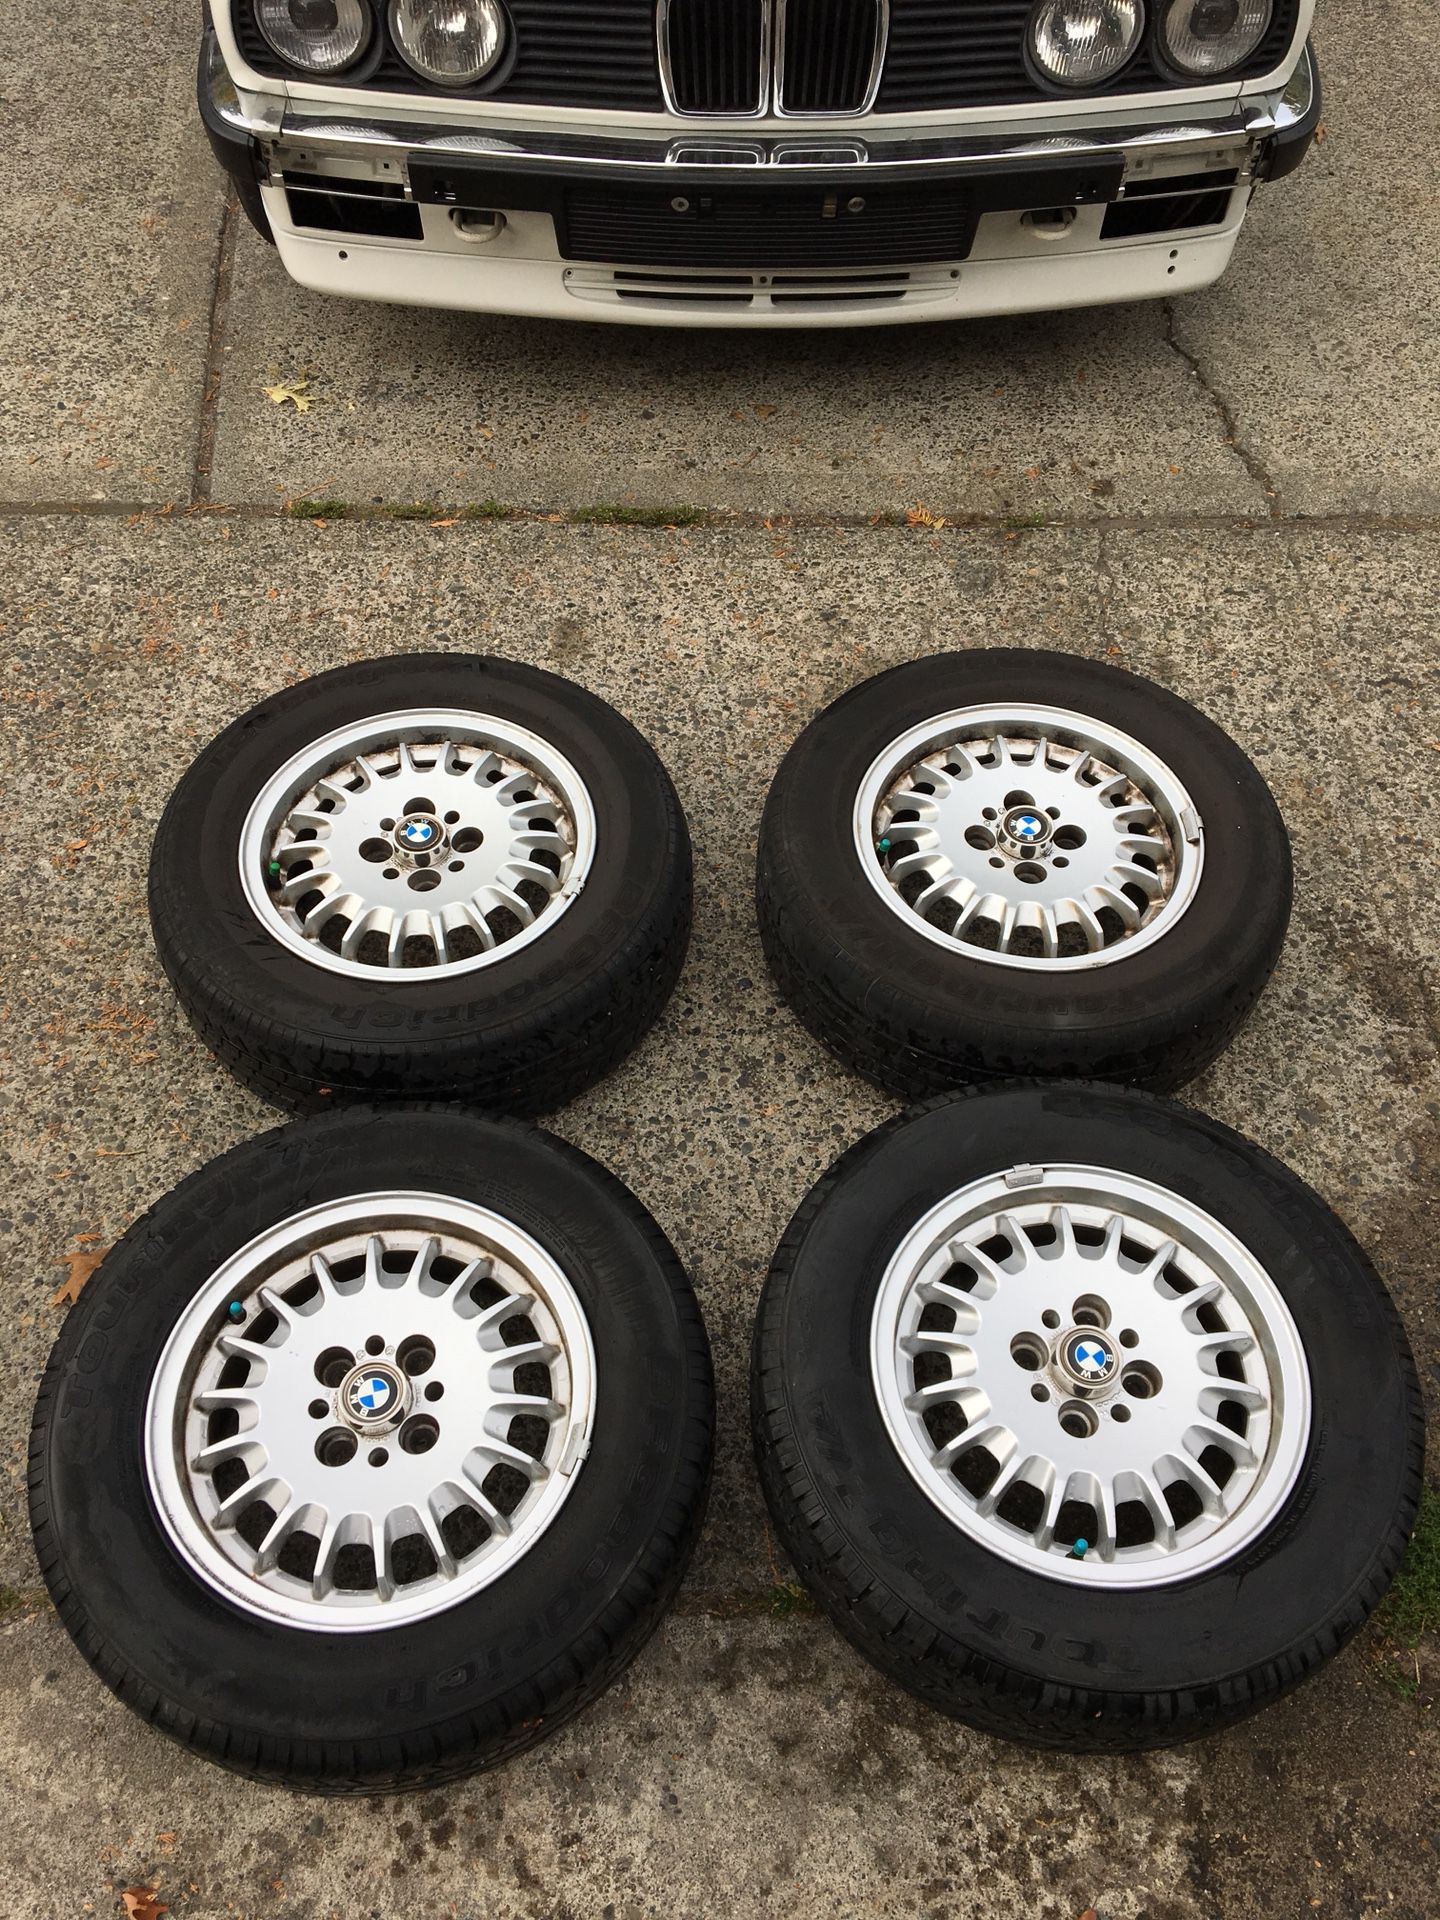 Excellent condition BMW E30 wheels